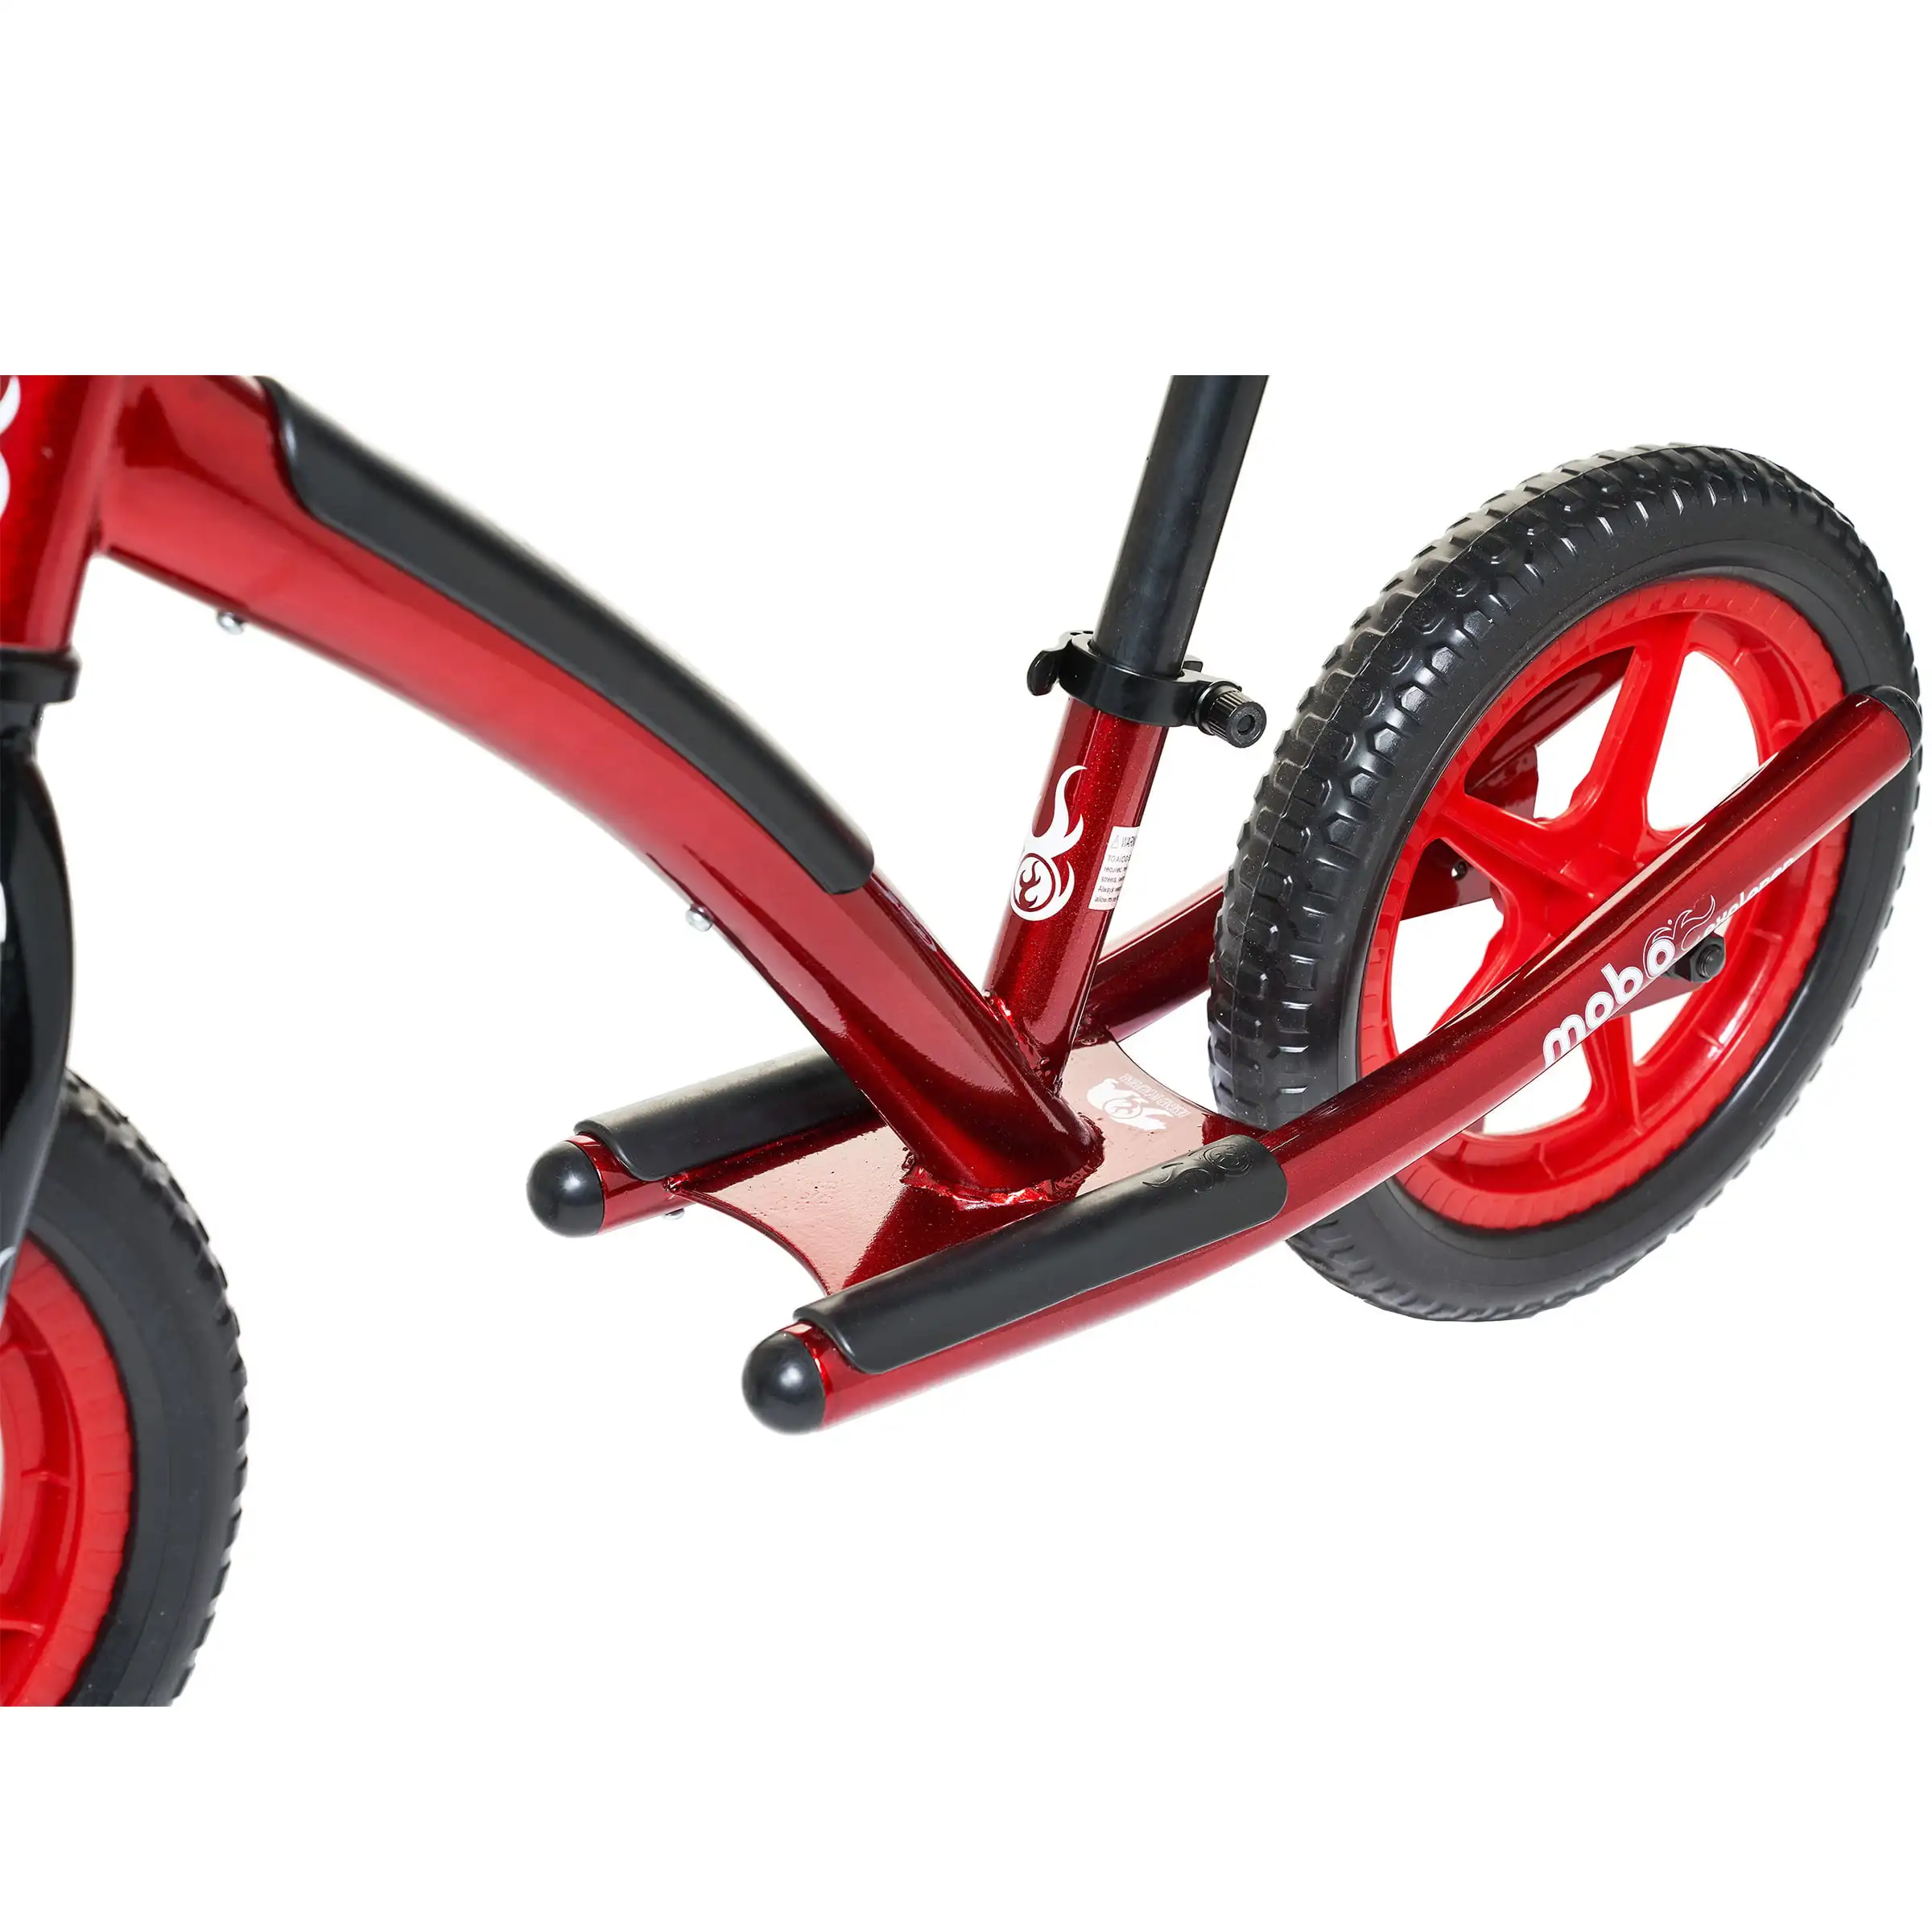 Bicicleta de equilibrio acolchada Mobo Explorer. Bicicleta sin pedales para  niños, ruedas de 12 pulgadas